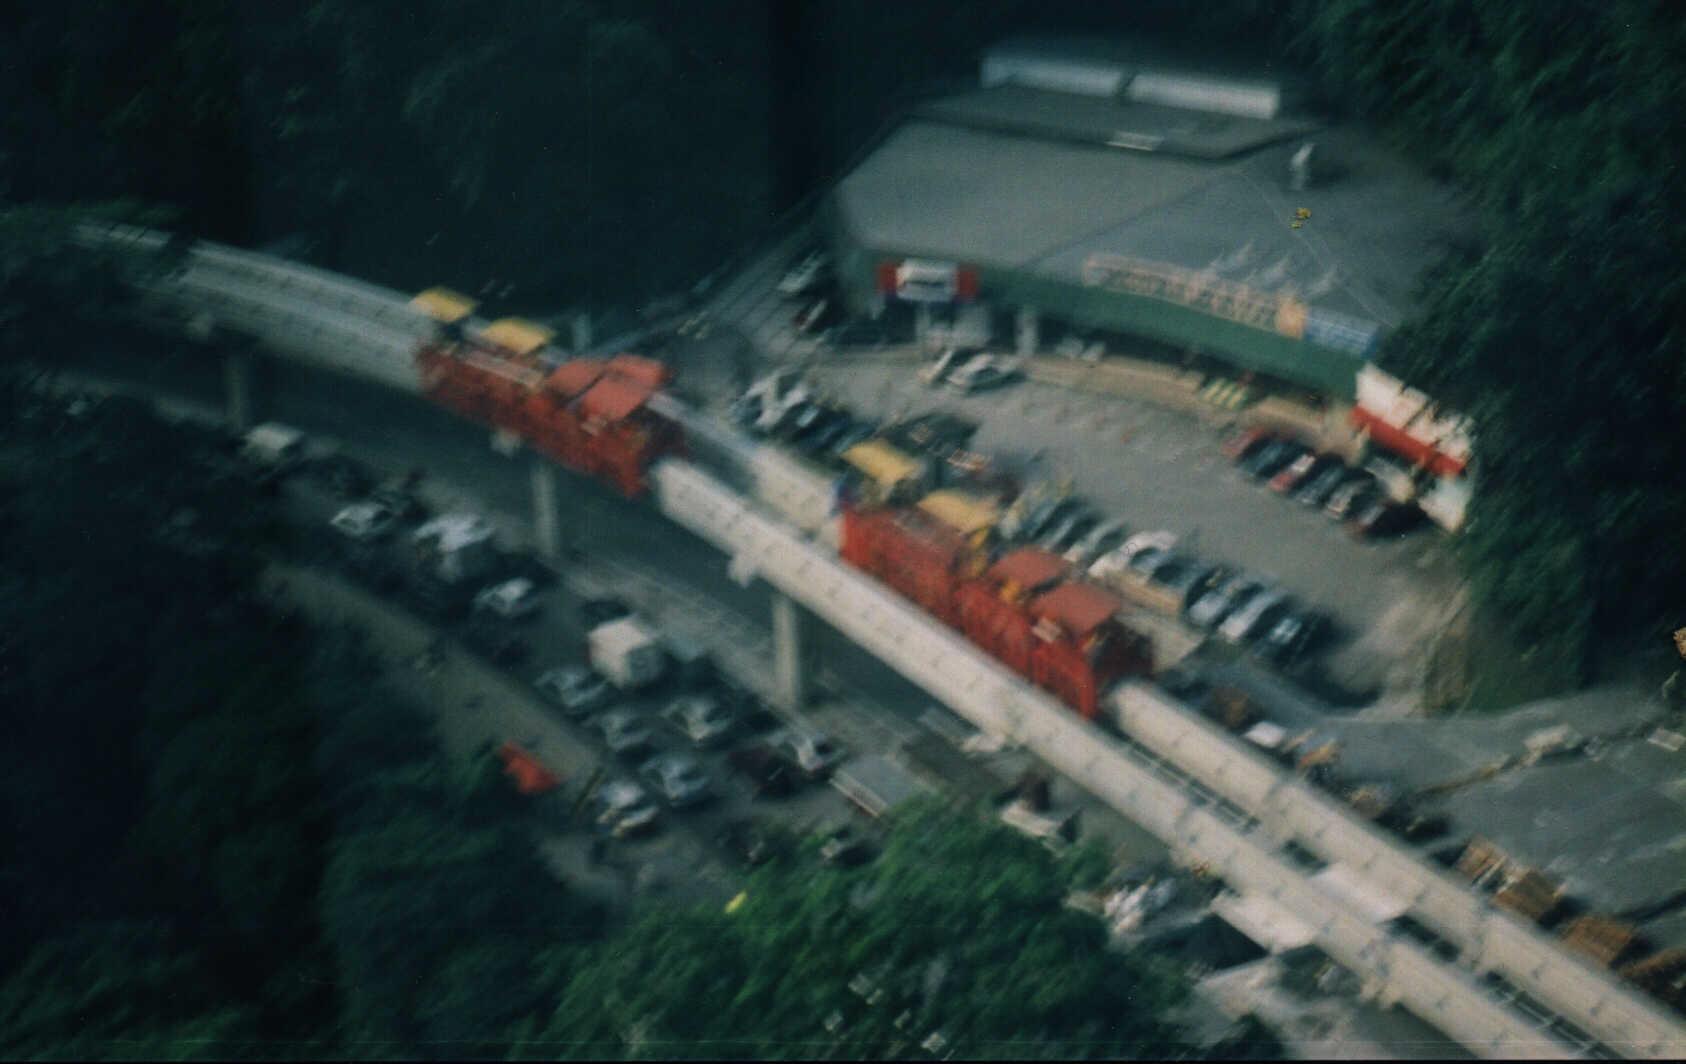 [Monorail under construction]